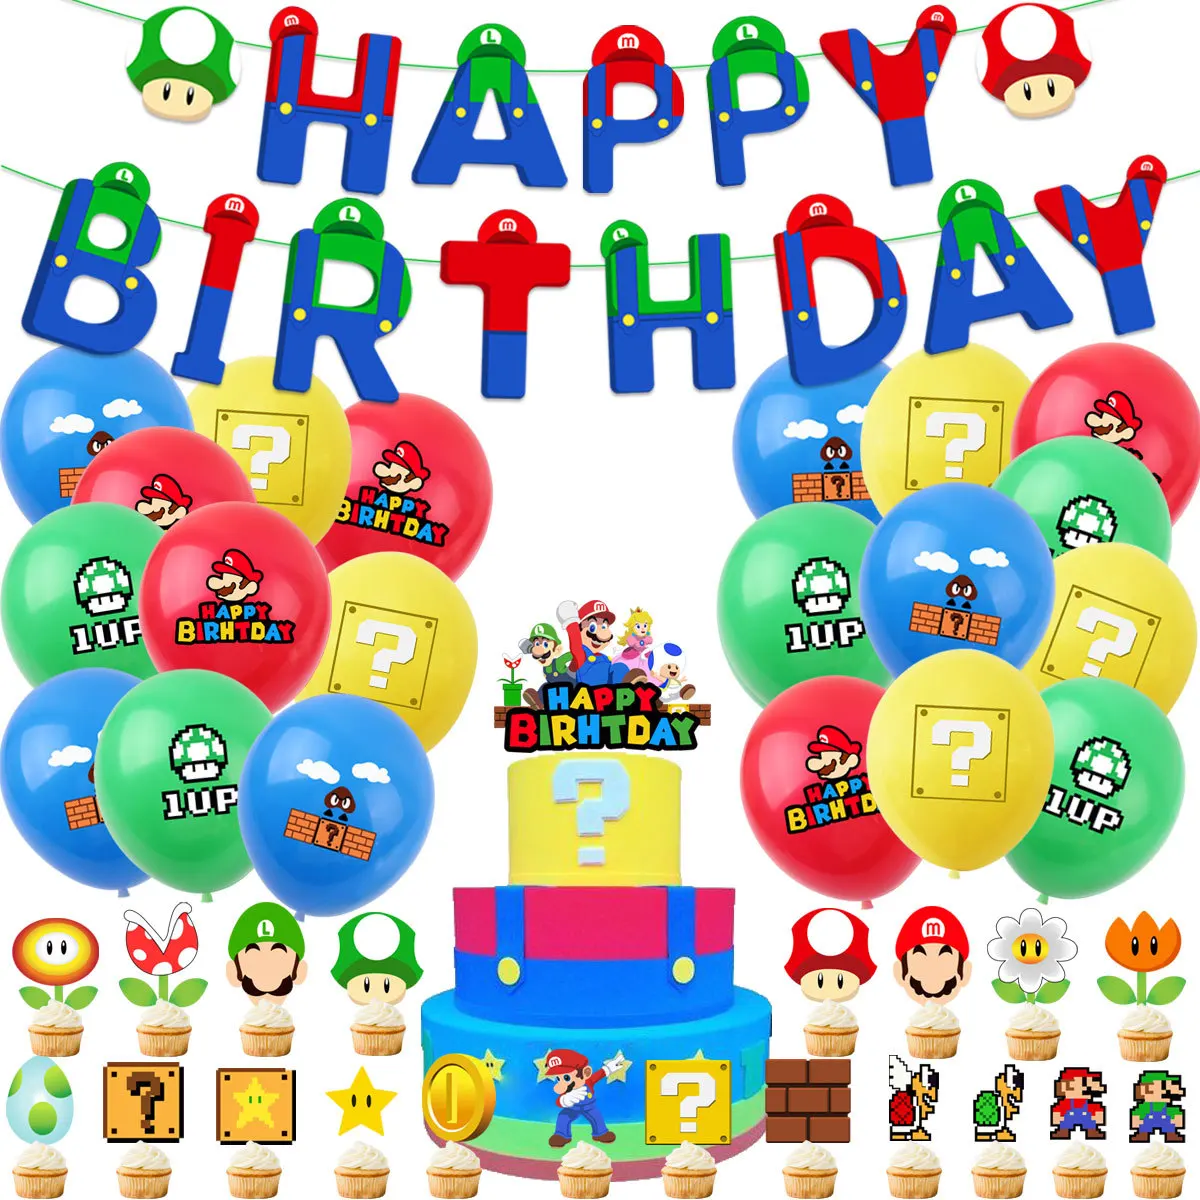 Super Mario Theme Happy Birthday Party Balloon Banners Set Kid Birthday Party Decor Boy Children Birthday Balloons Kids Toy